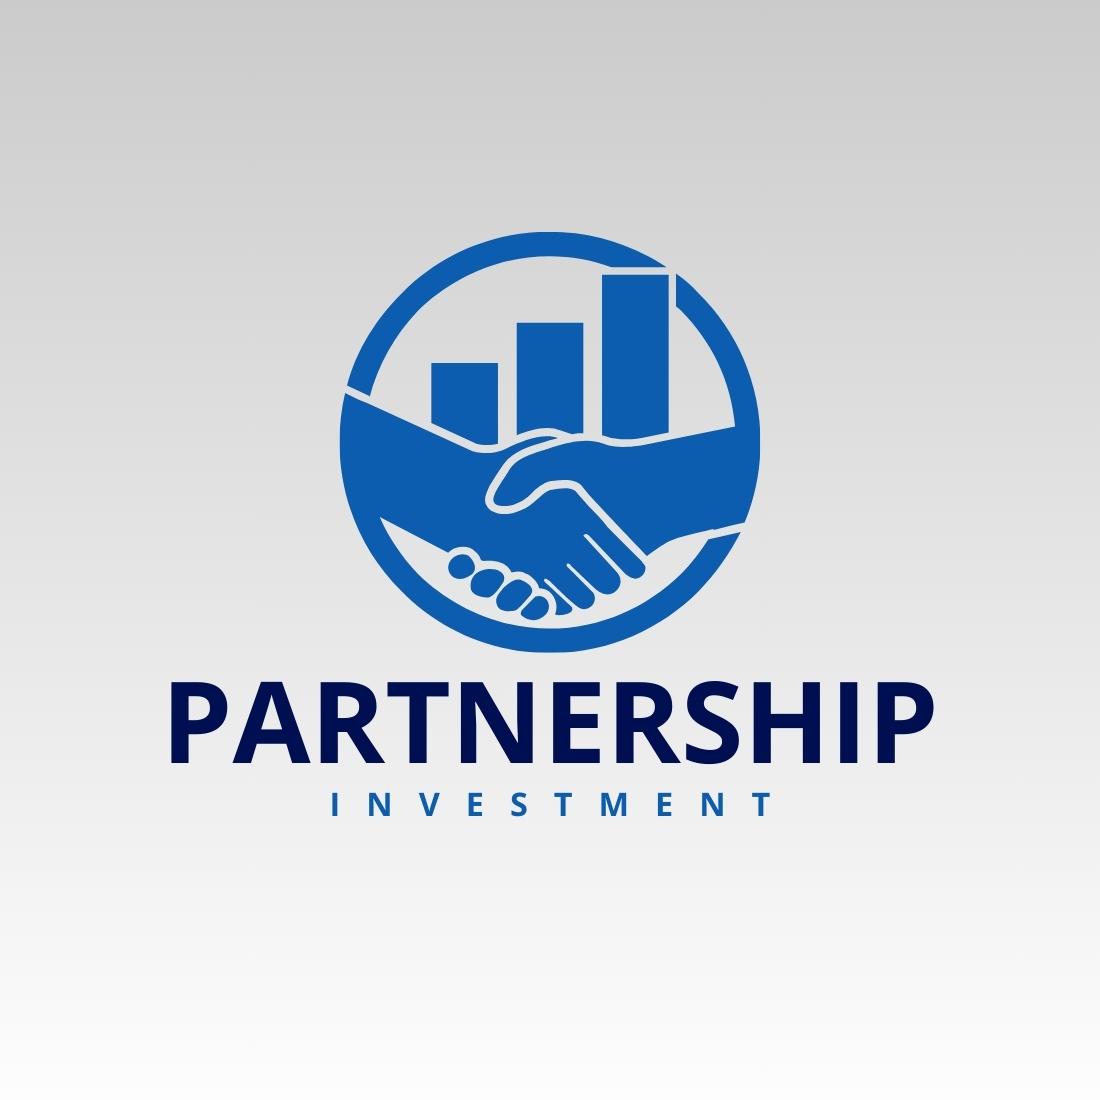 Blue Minimalist Partnership Logo Template cover image.